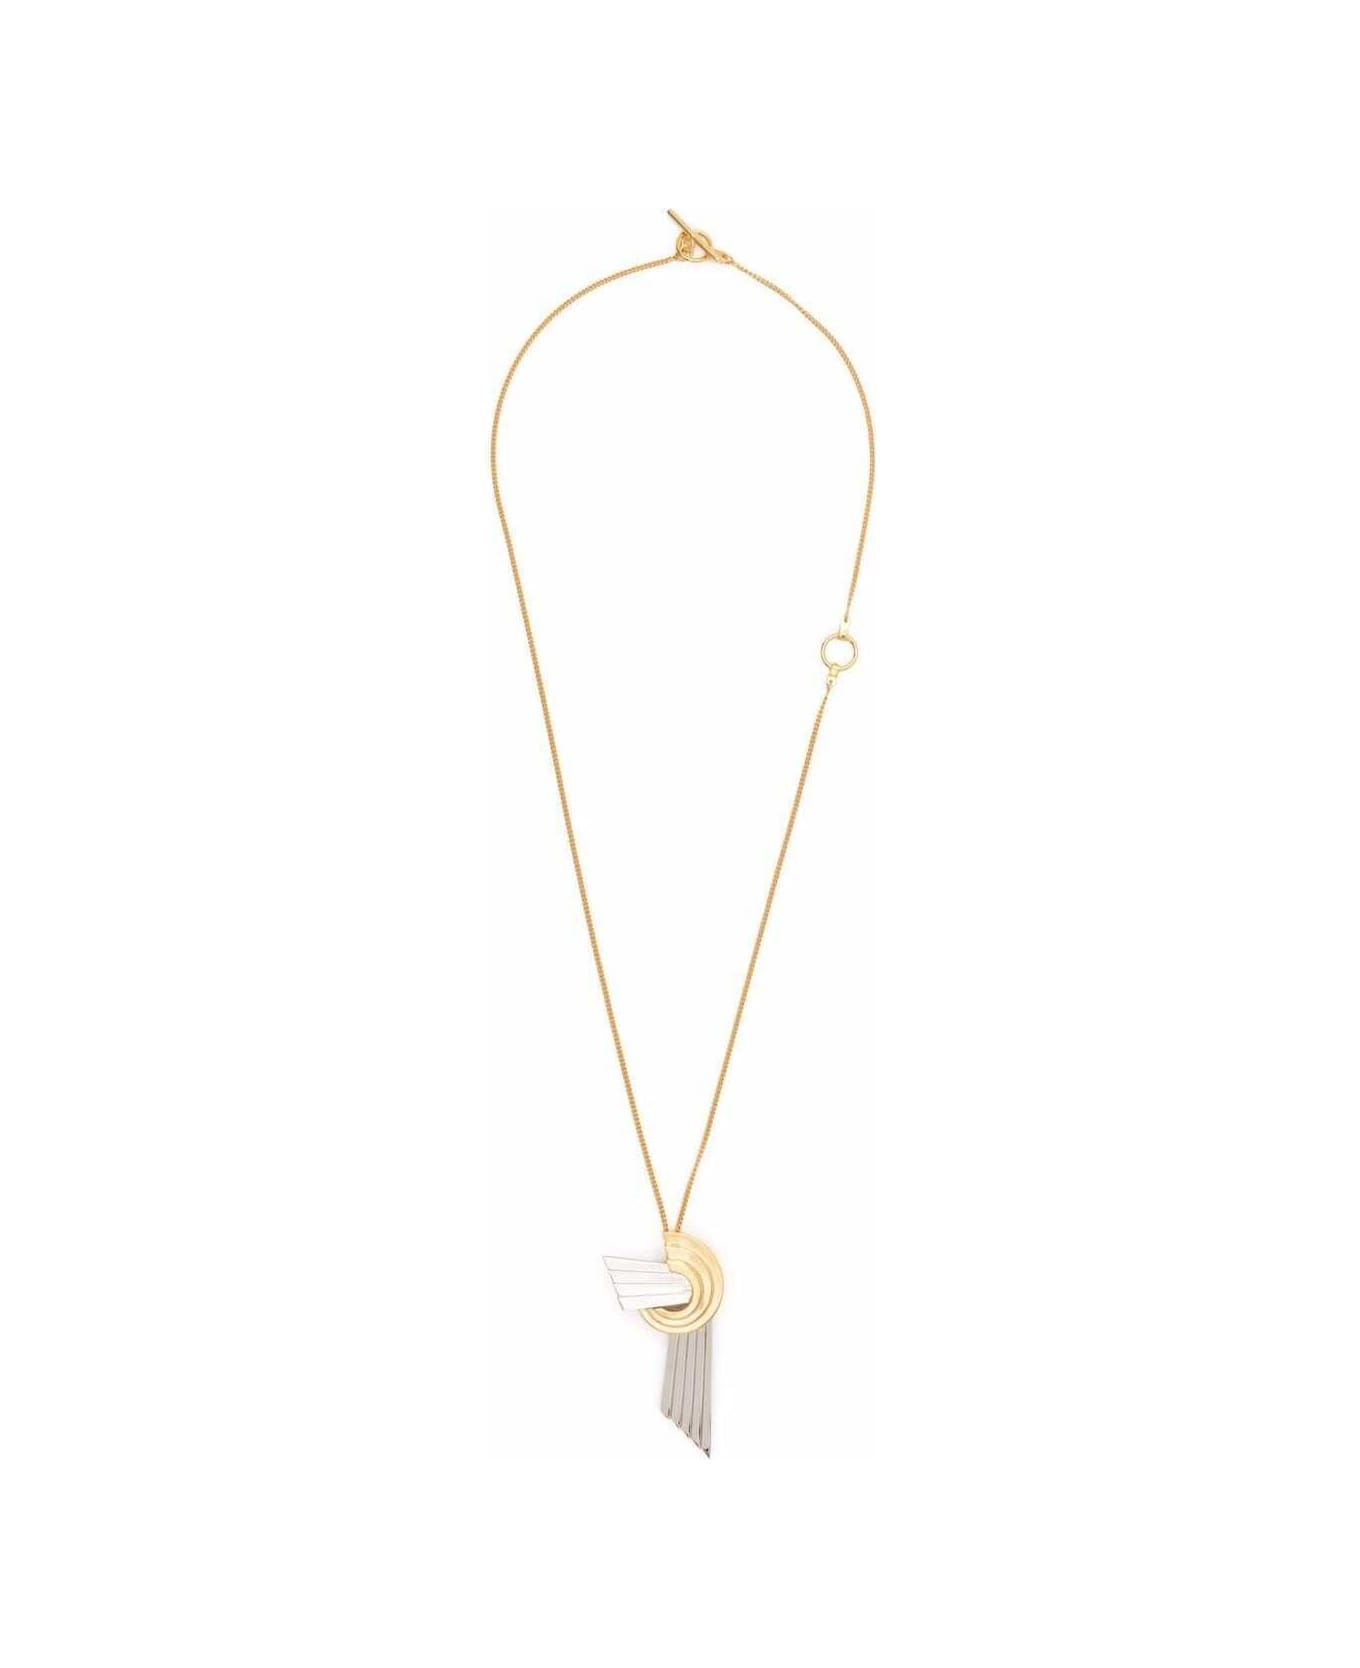 Leda Madera Meryl Brass Necklace With Pendant Detail - Metallic ネックレス